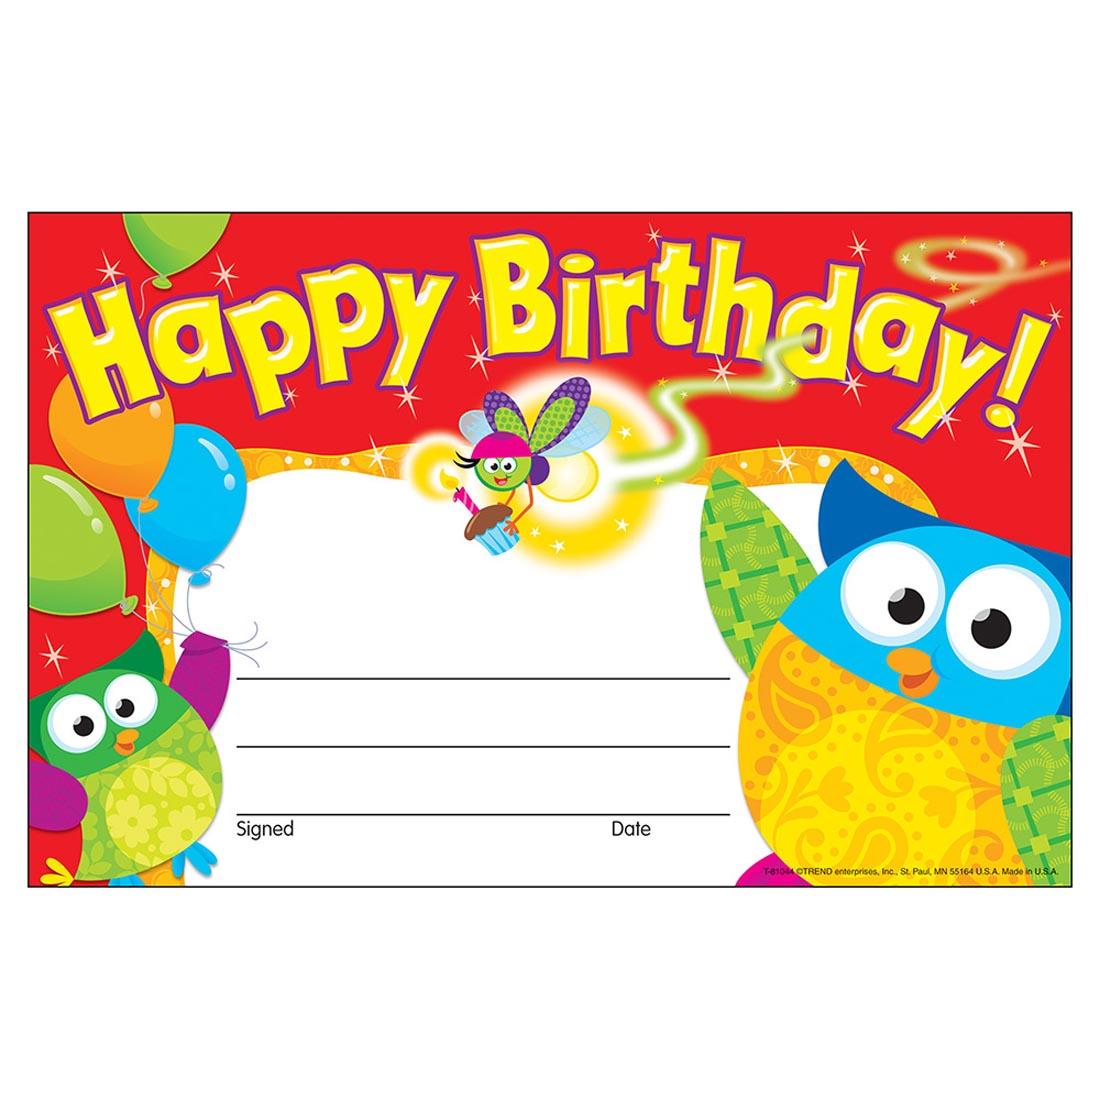 TREND Owl-Stars! Happy Birthday Recognition Award